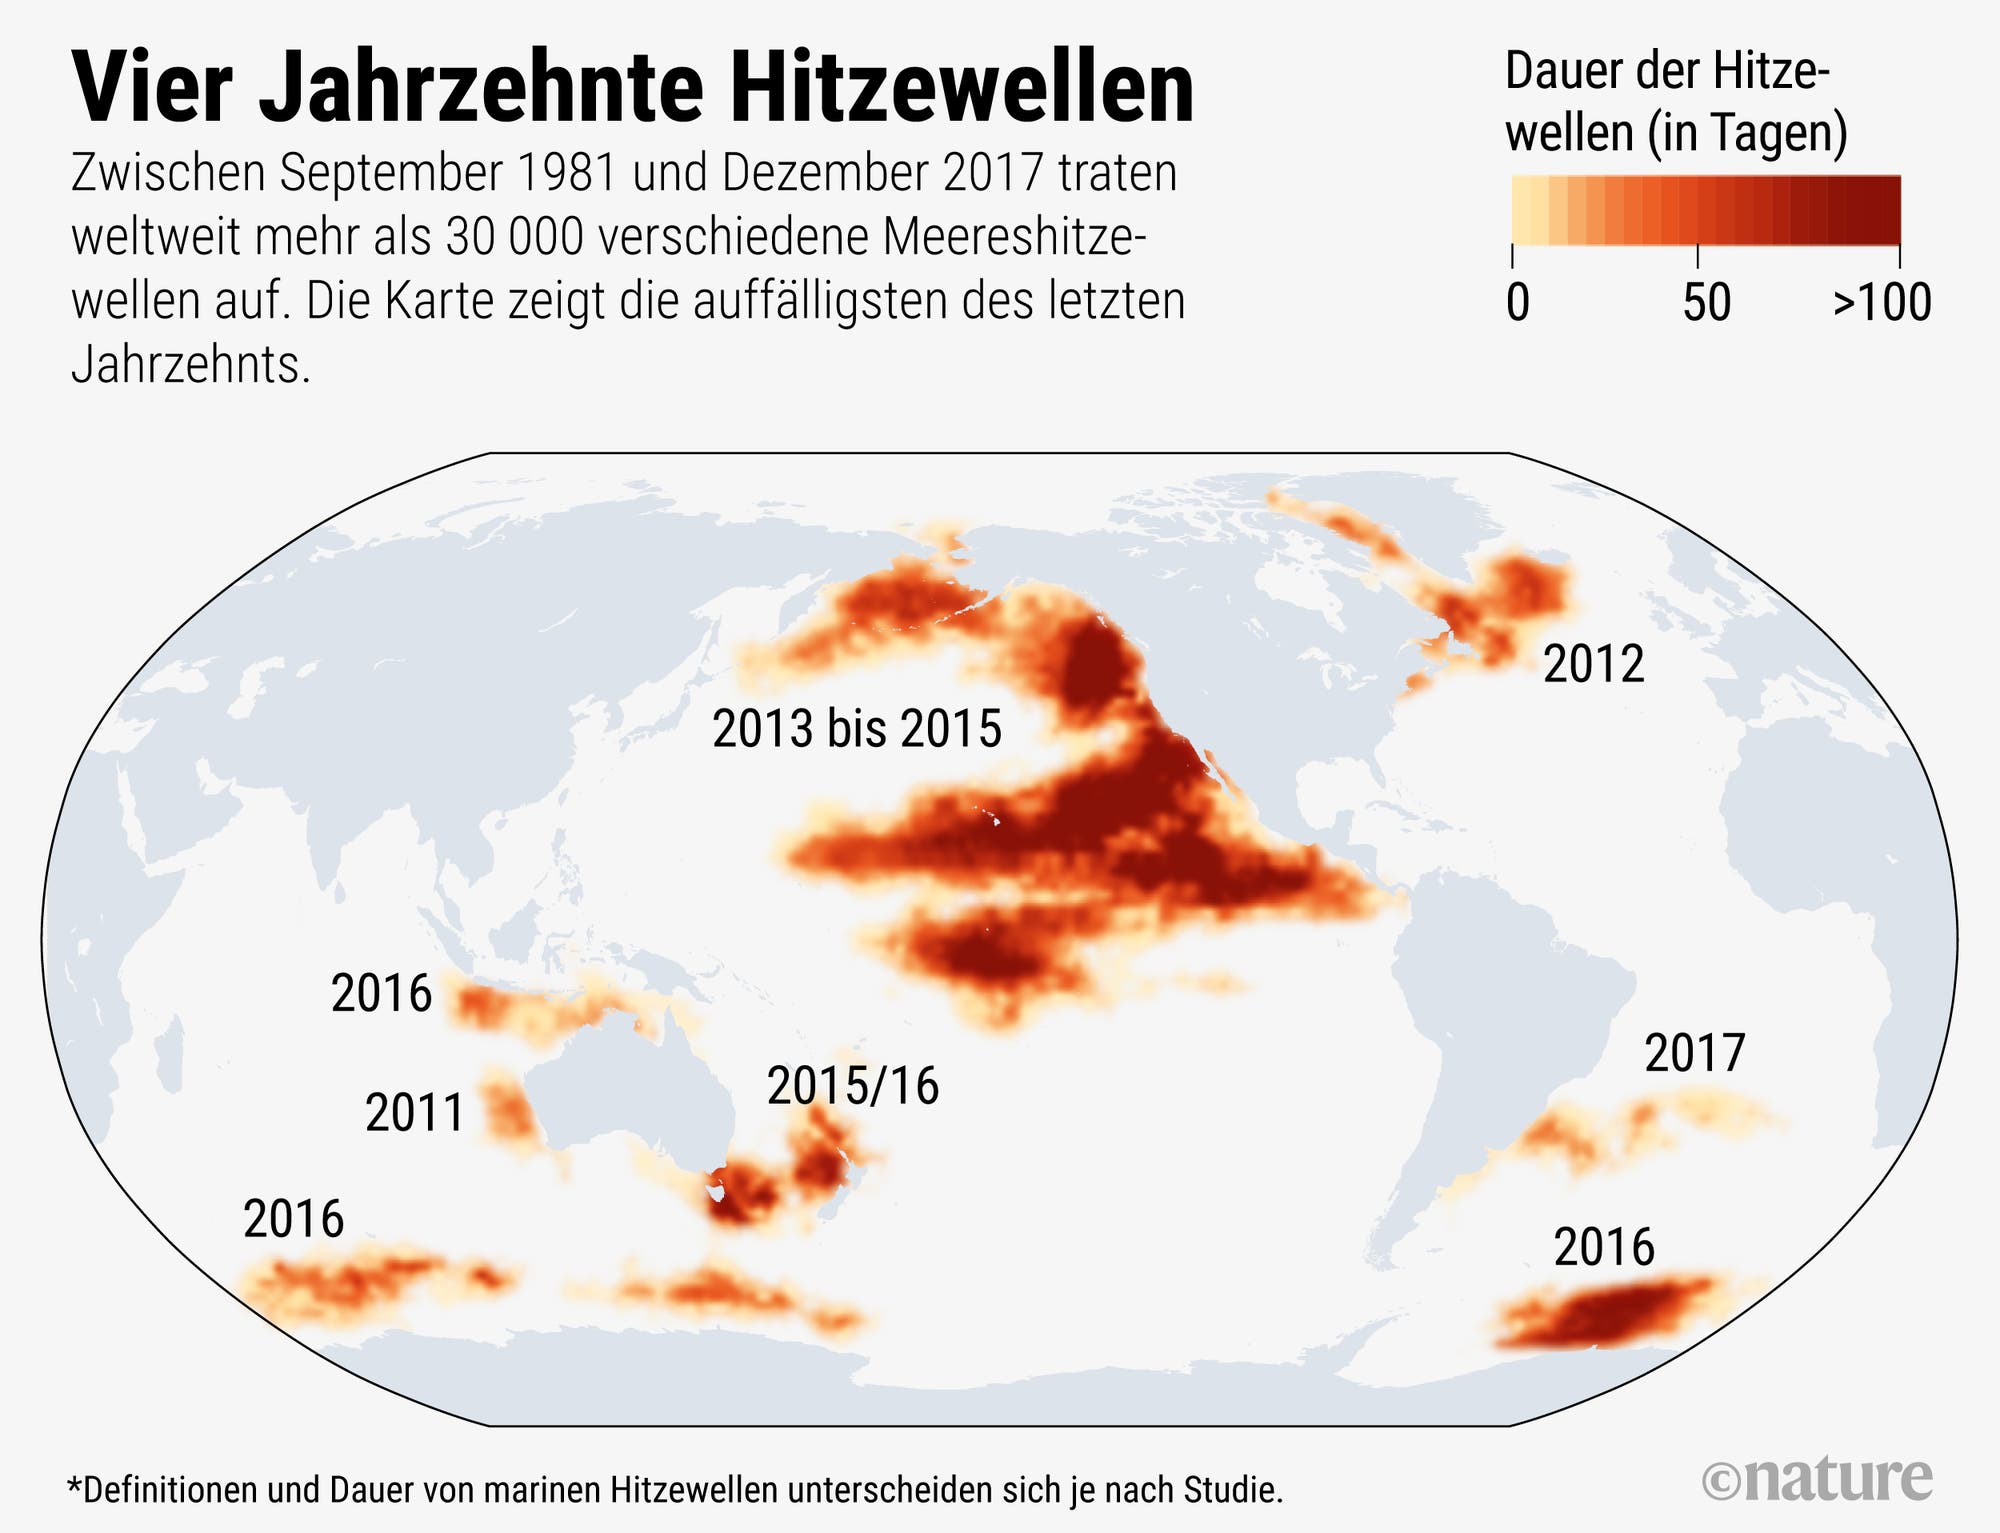 In den letzten Jahrzehnten ereigneten sich einige marine Hitzewellen in den Weltmeeren